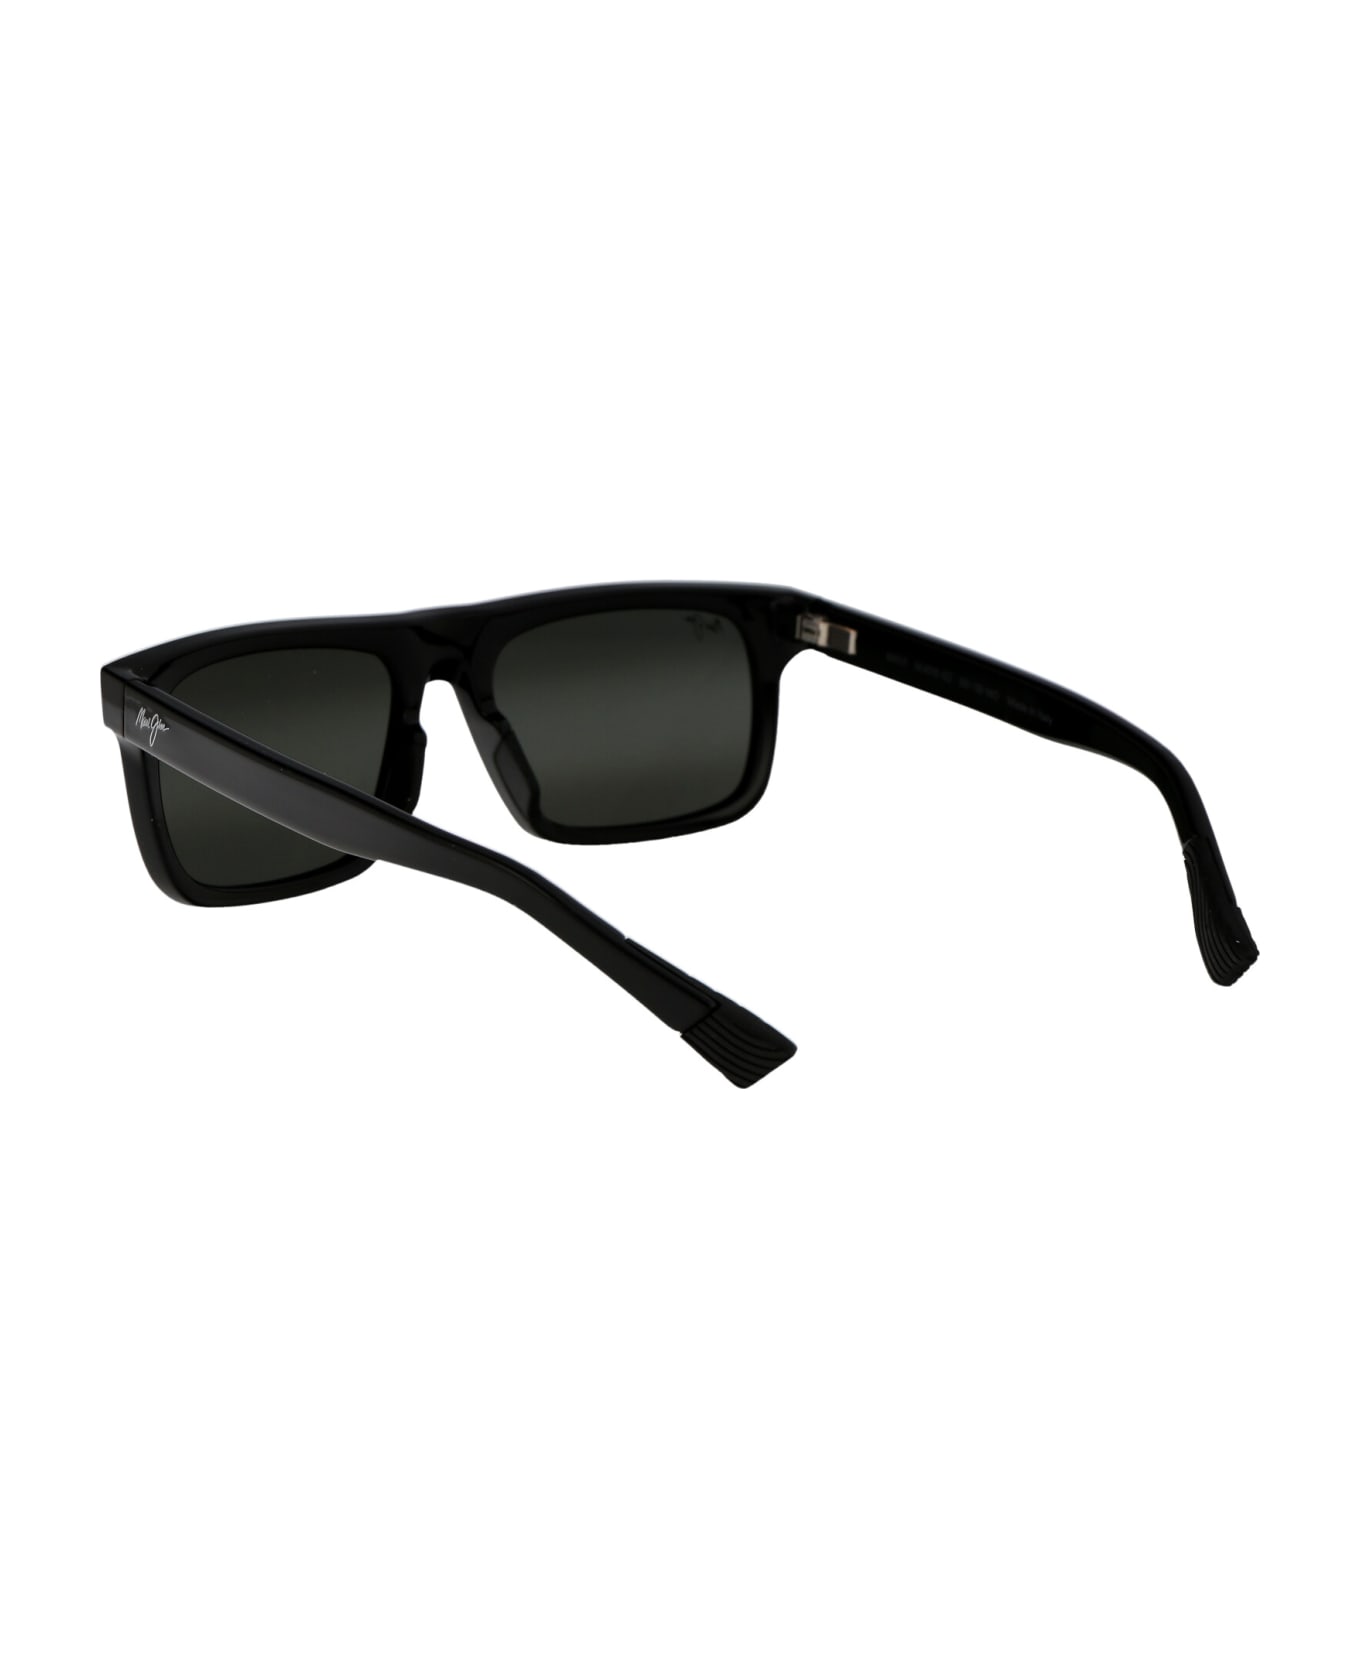 Maui Jim Opio Sunglasses - 002 GREY OPIO SHINY BLACK